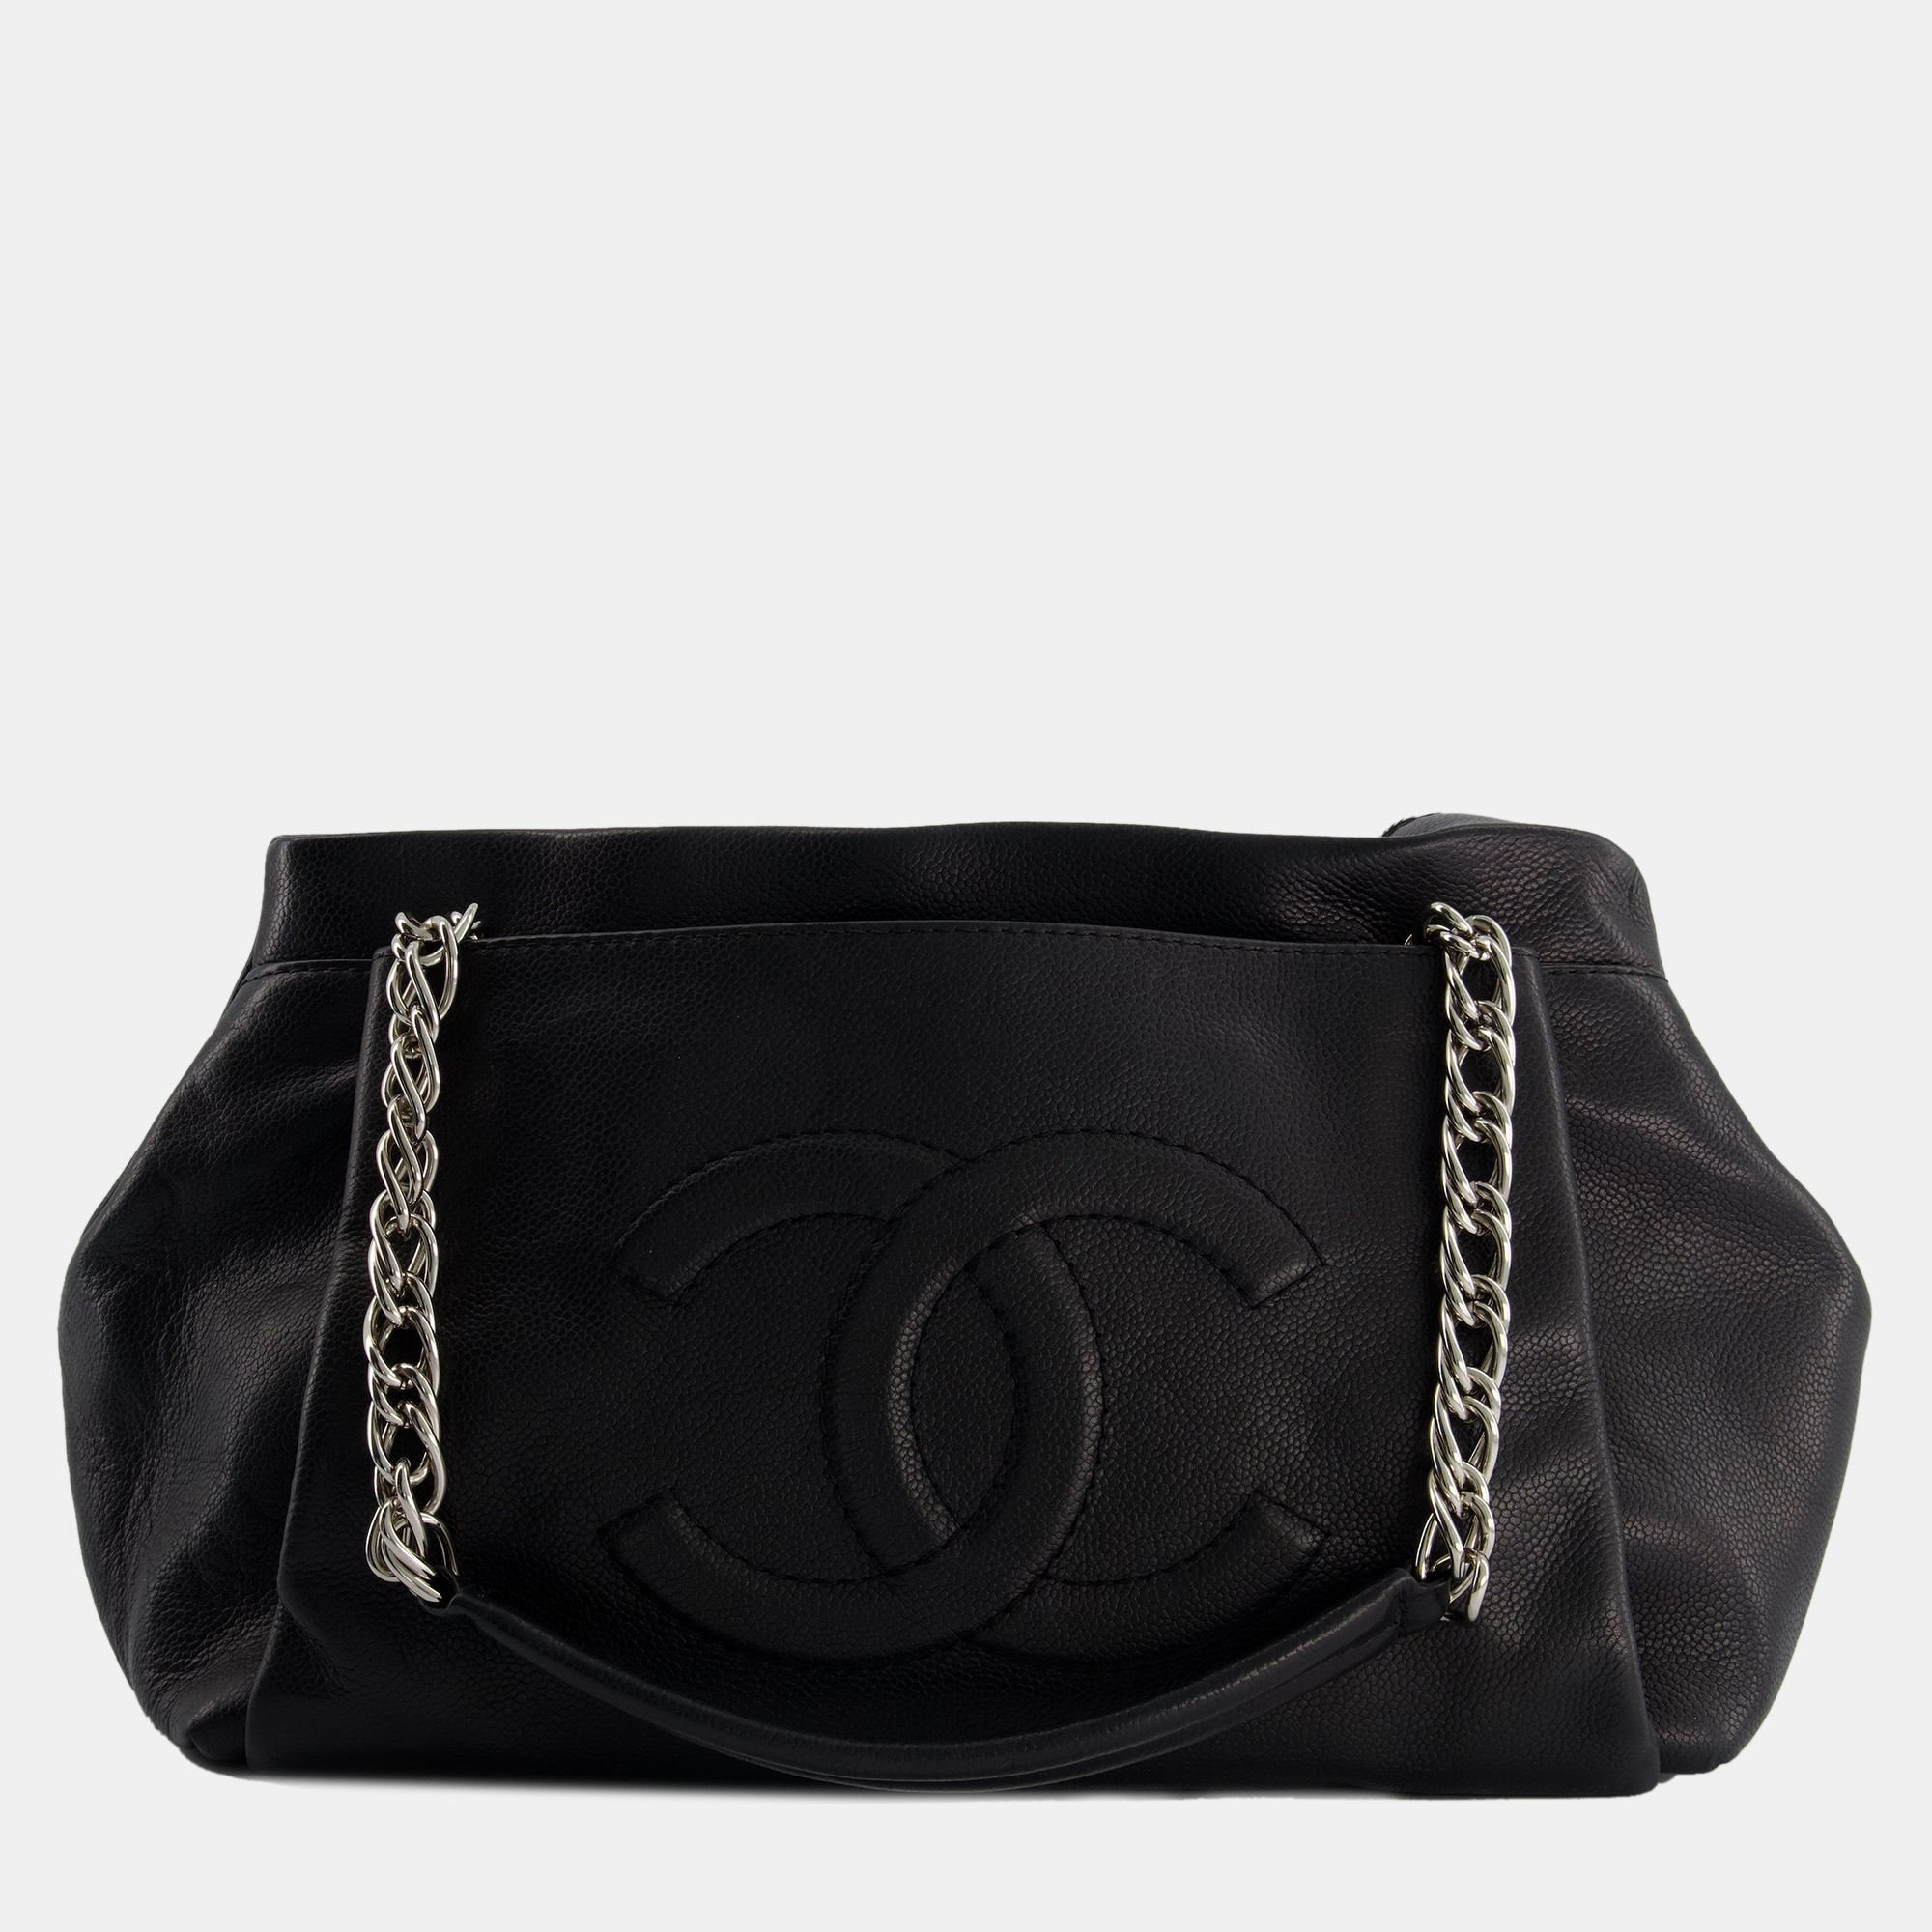 Chanel Black Caviar Leather CC Logo Shoulder Bag with Silver